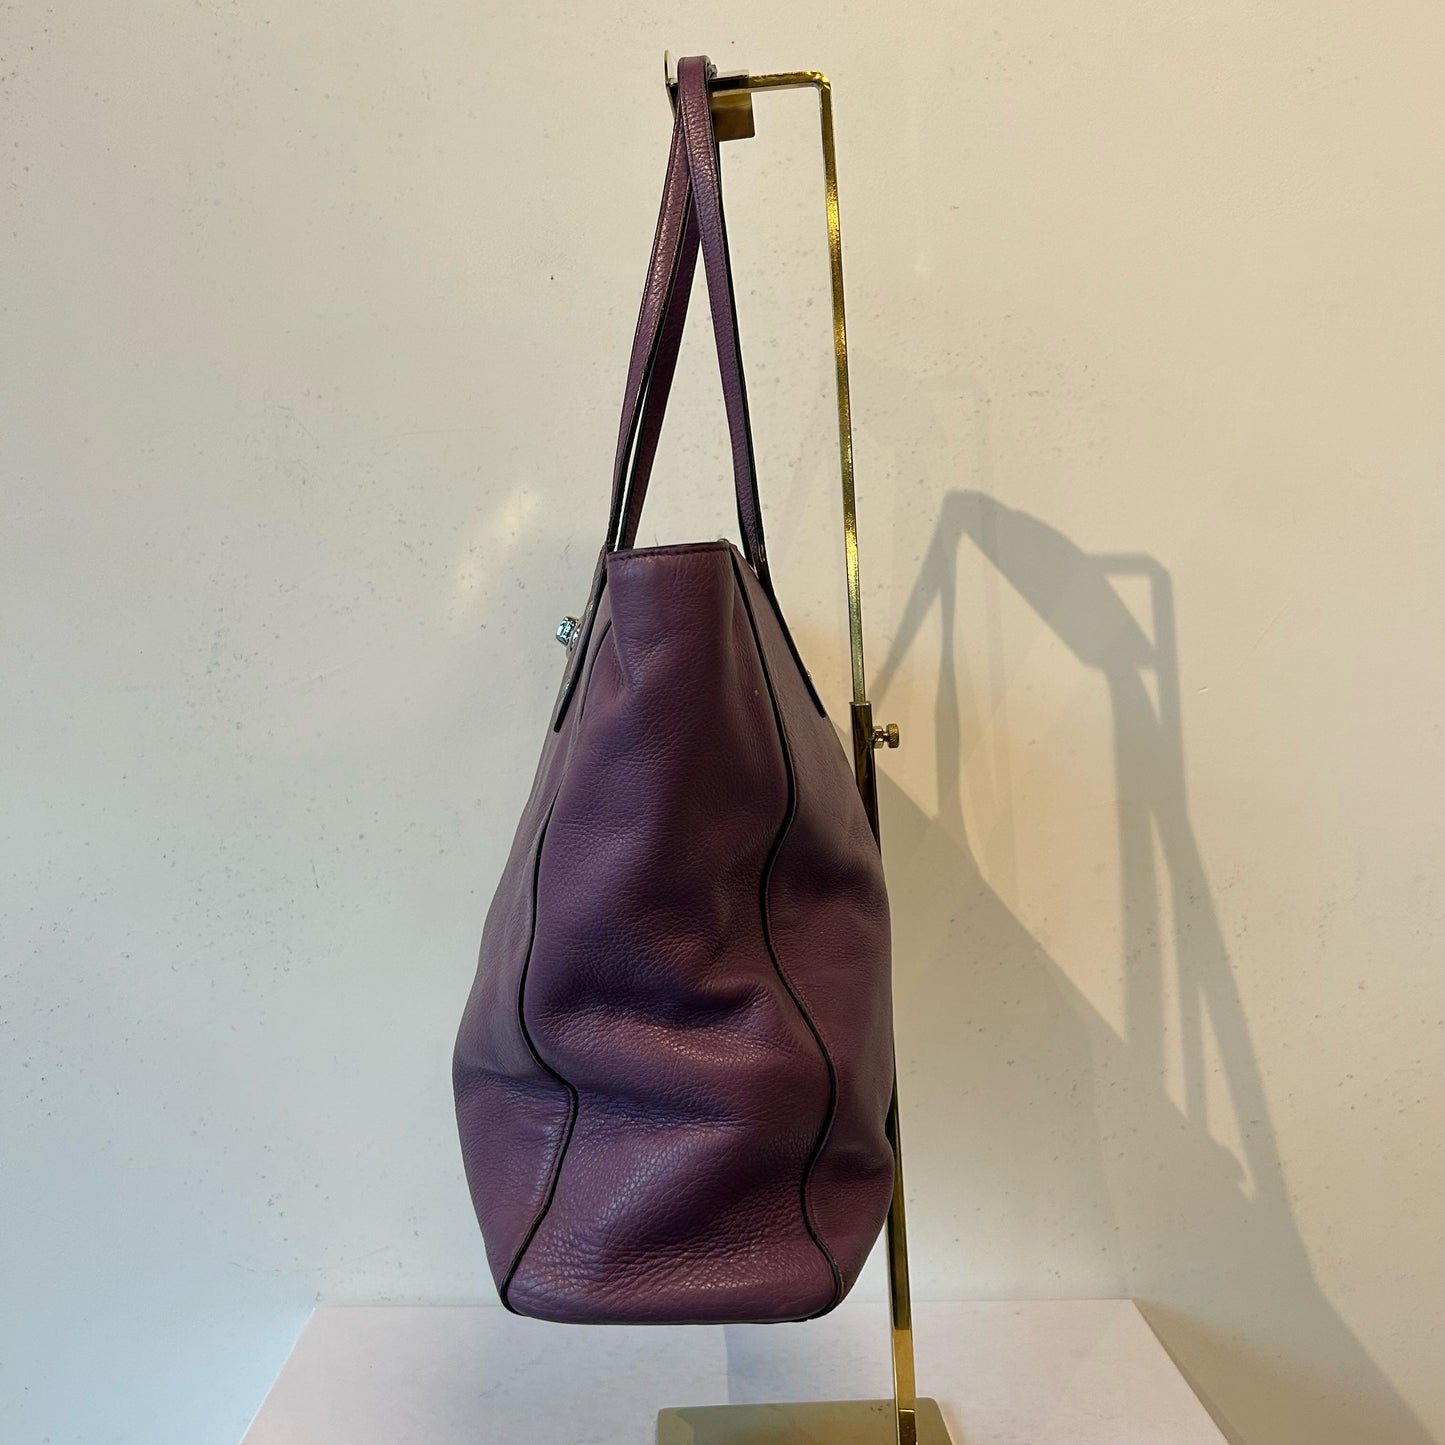 Coach Pebble Purple Handbag